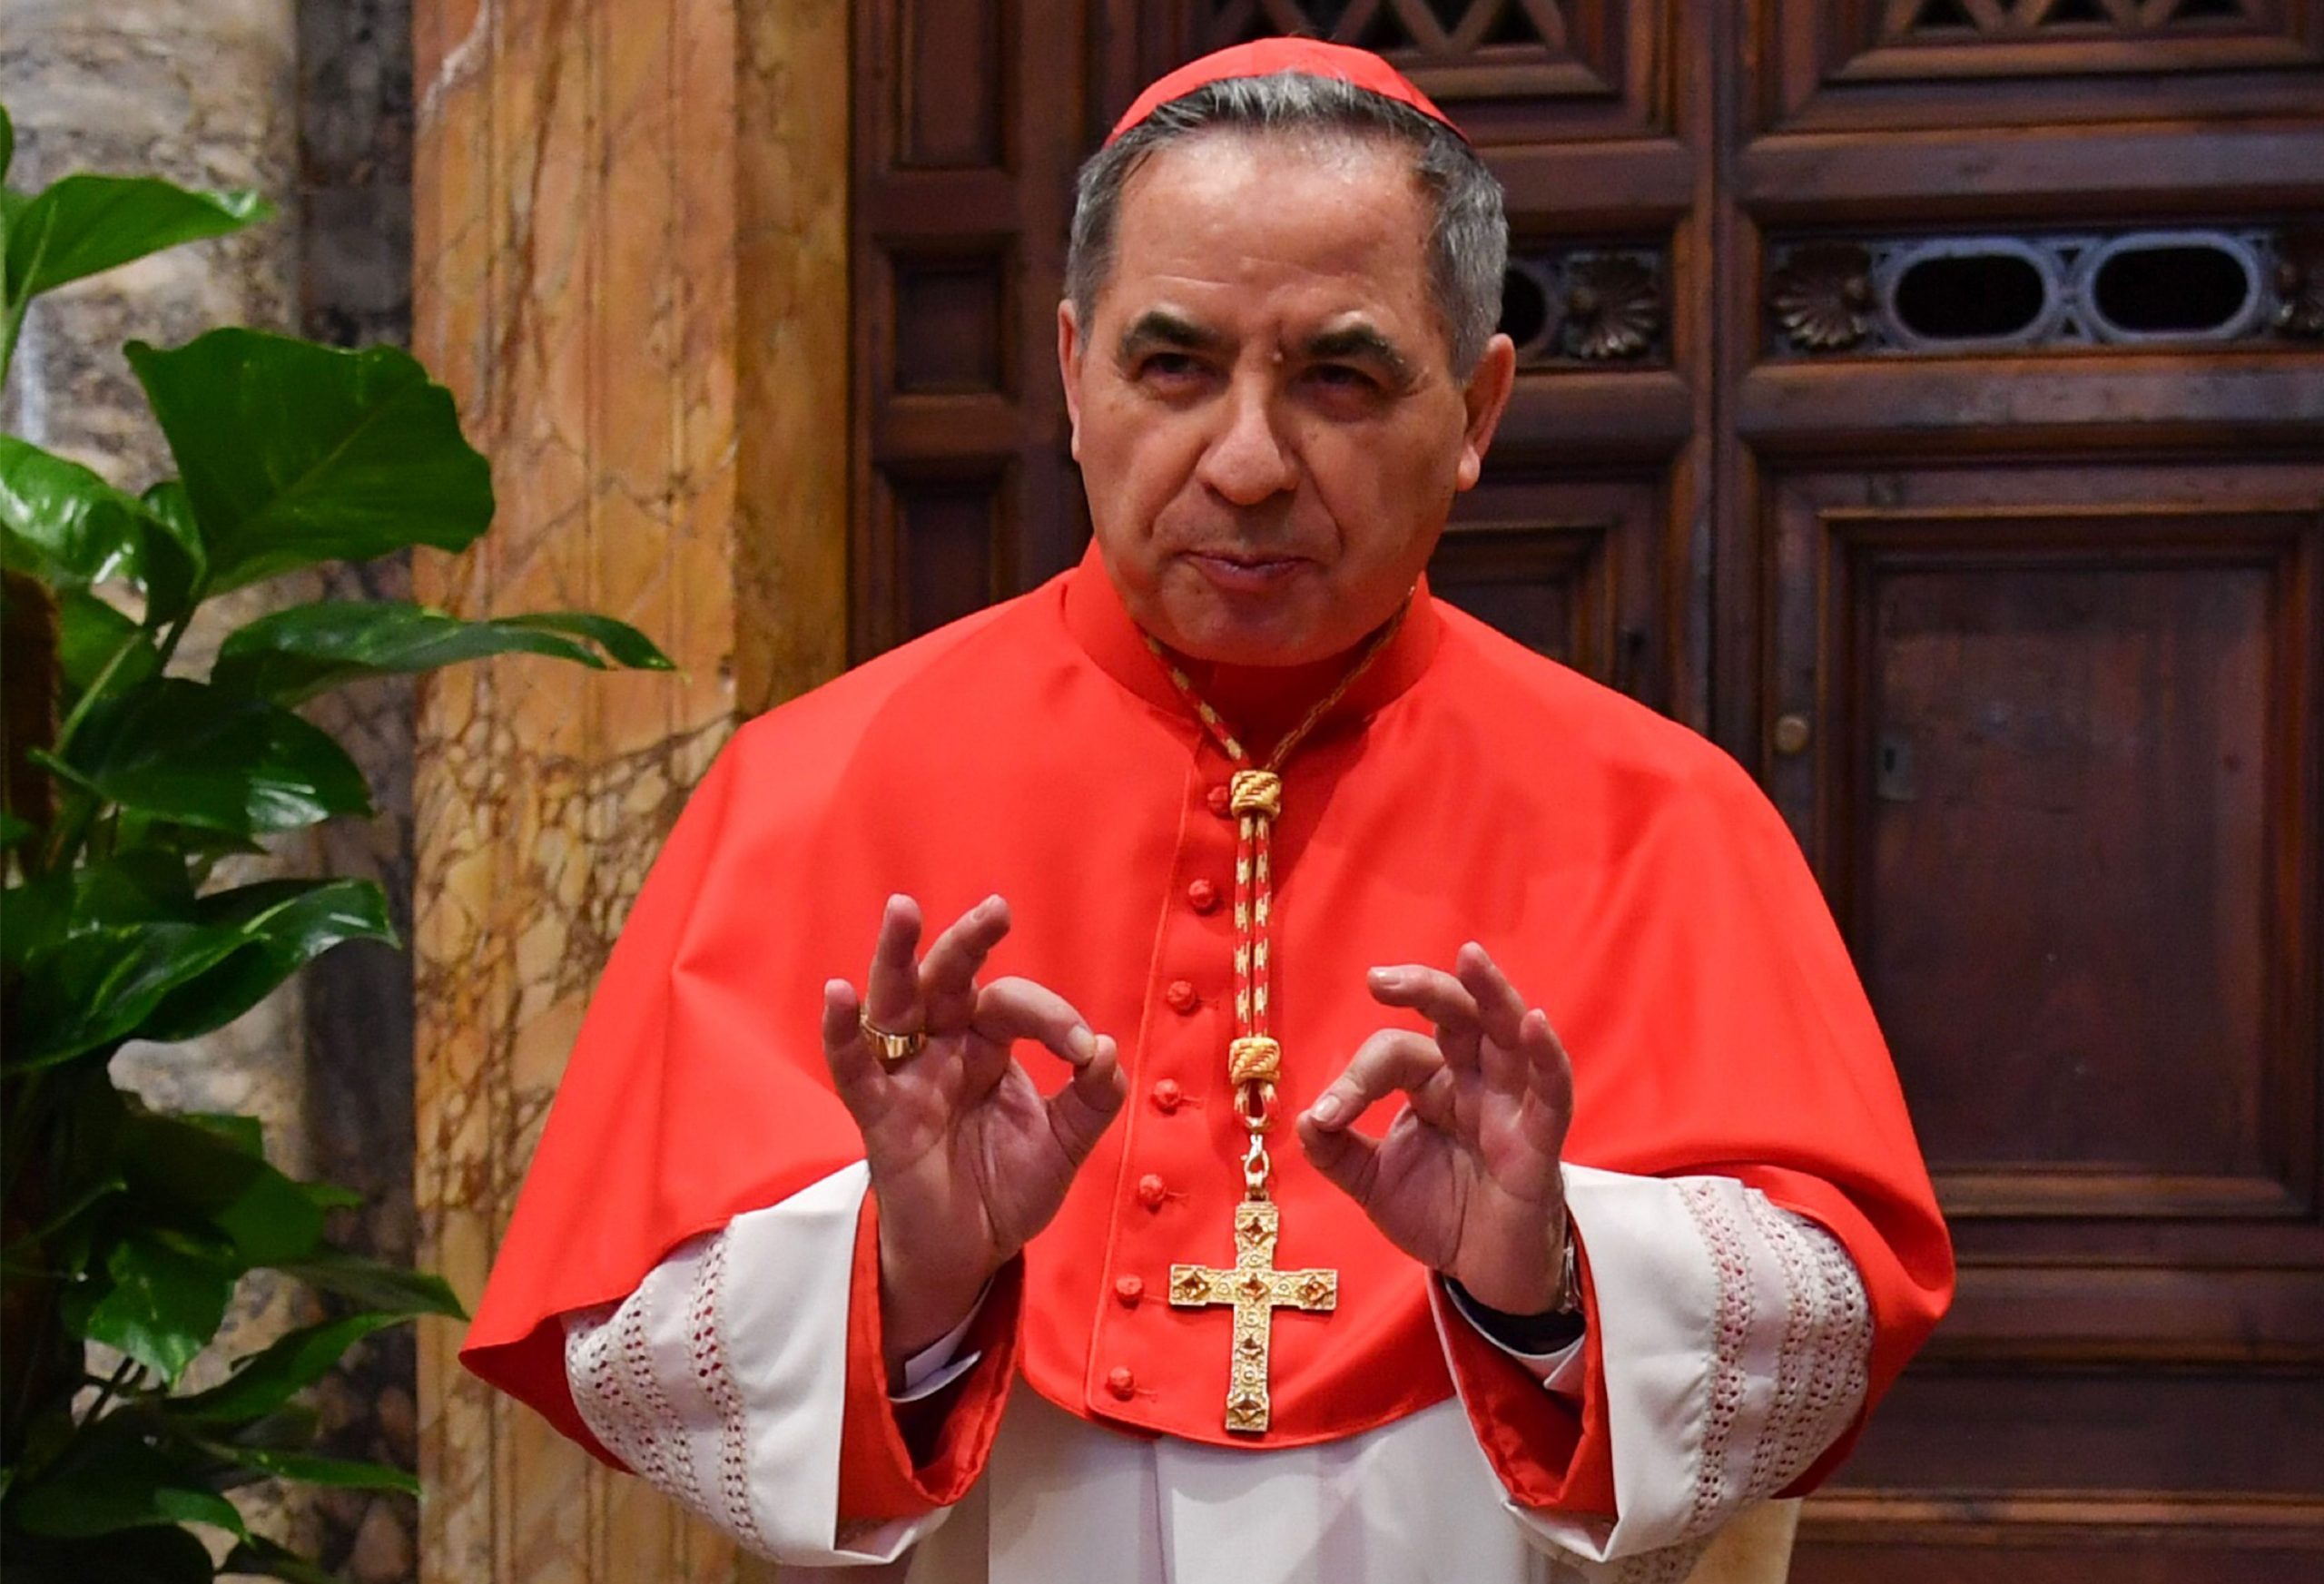 Vatican announces surprise resignation of top cardinal